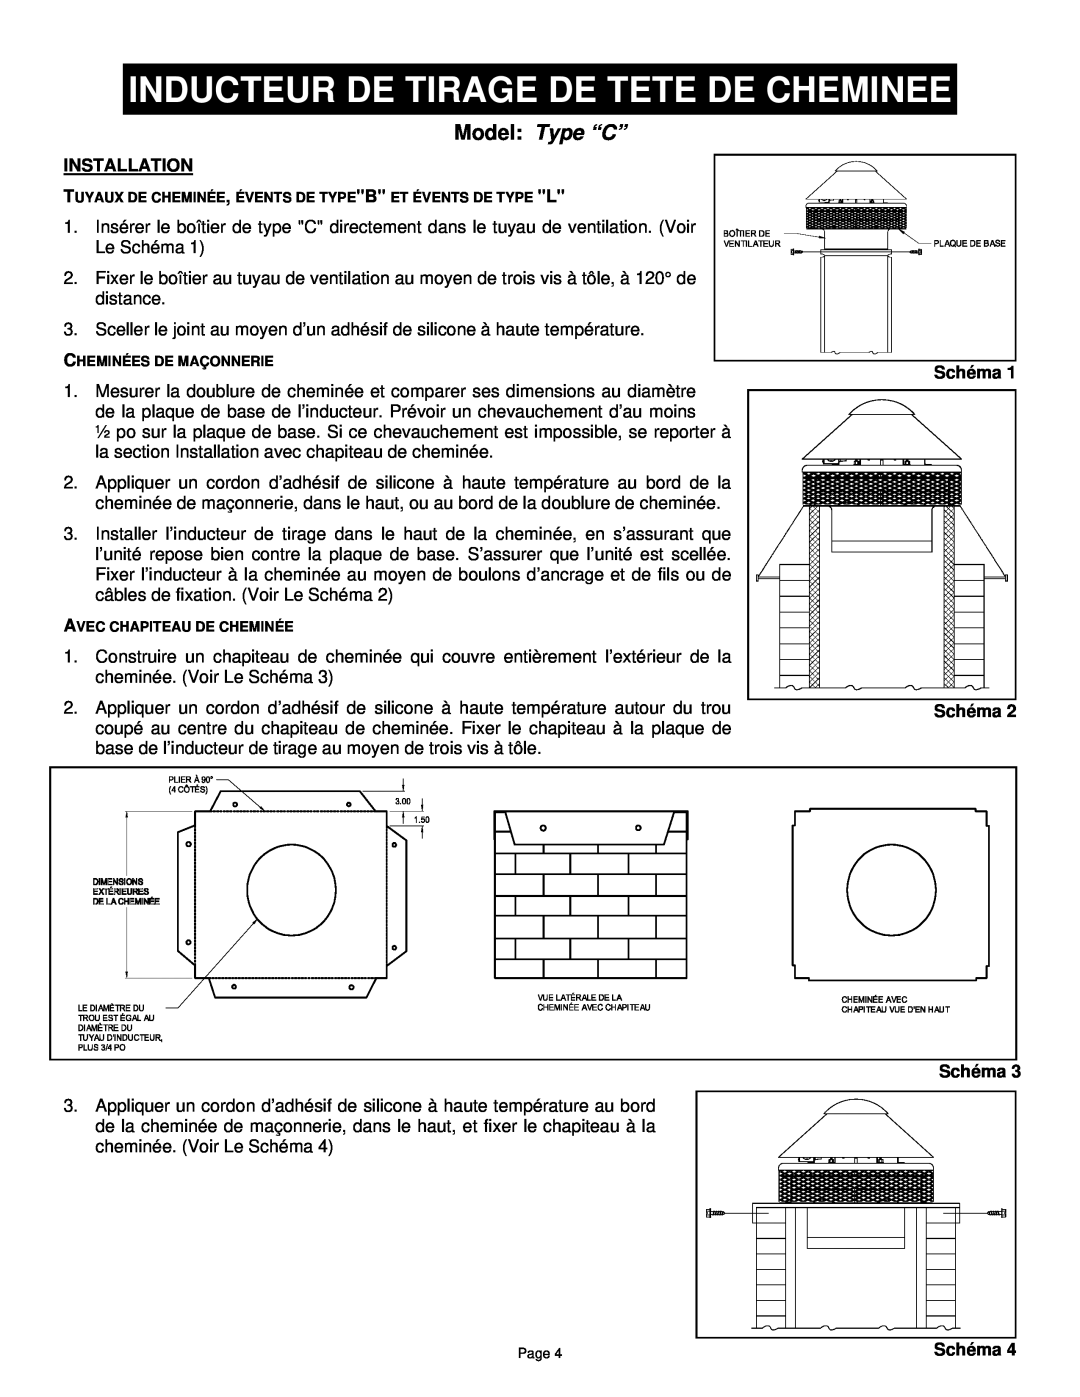 Field Controls TYPE "C manual Inducteur De Tirage De Tete De Cheminee, Schéma Schéma, Model Type “C”, Installation 